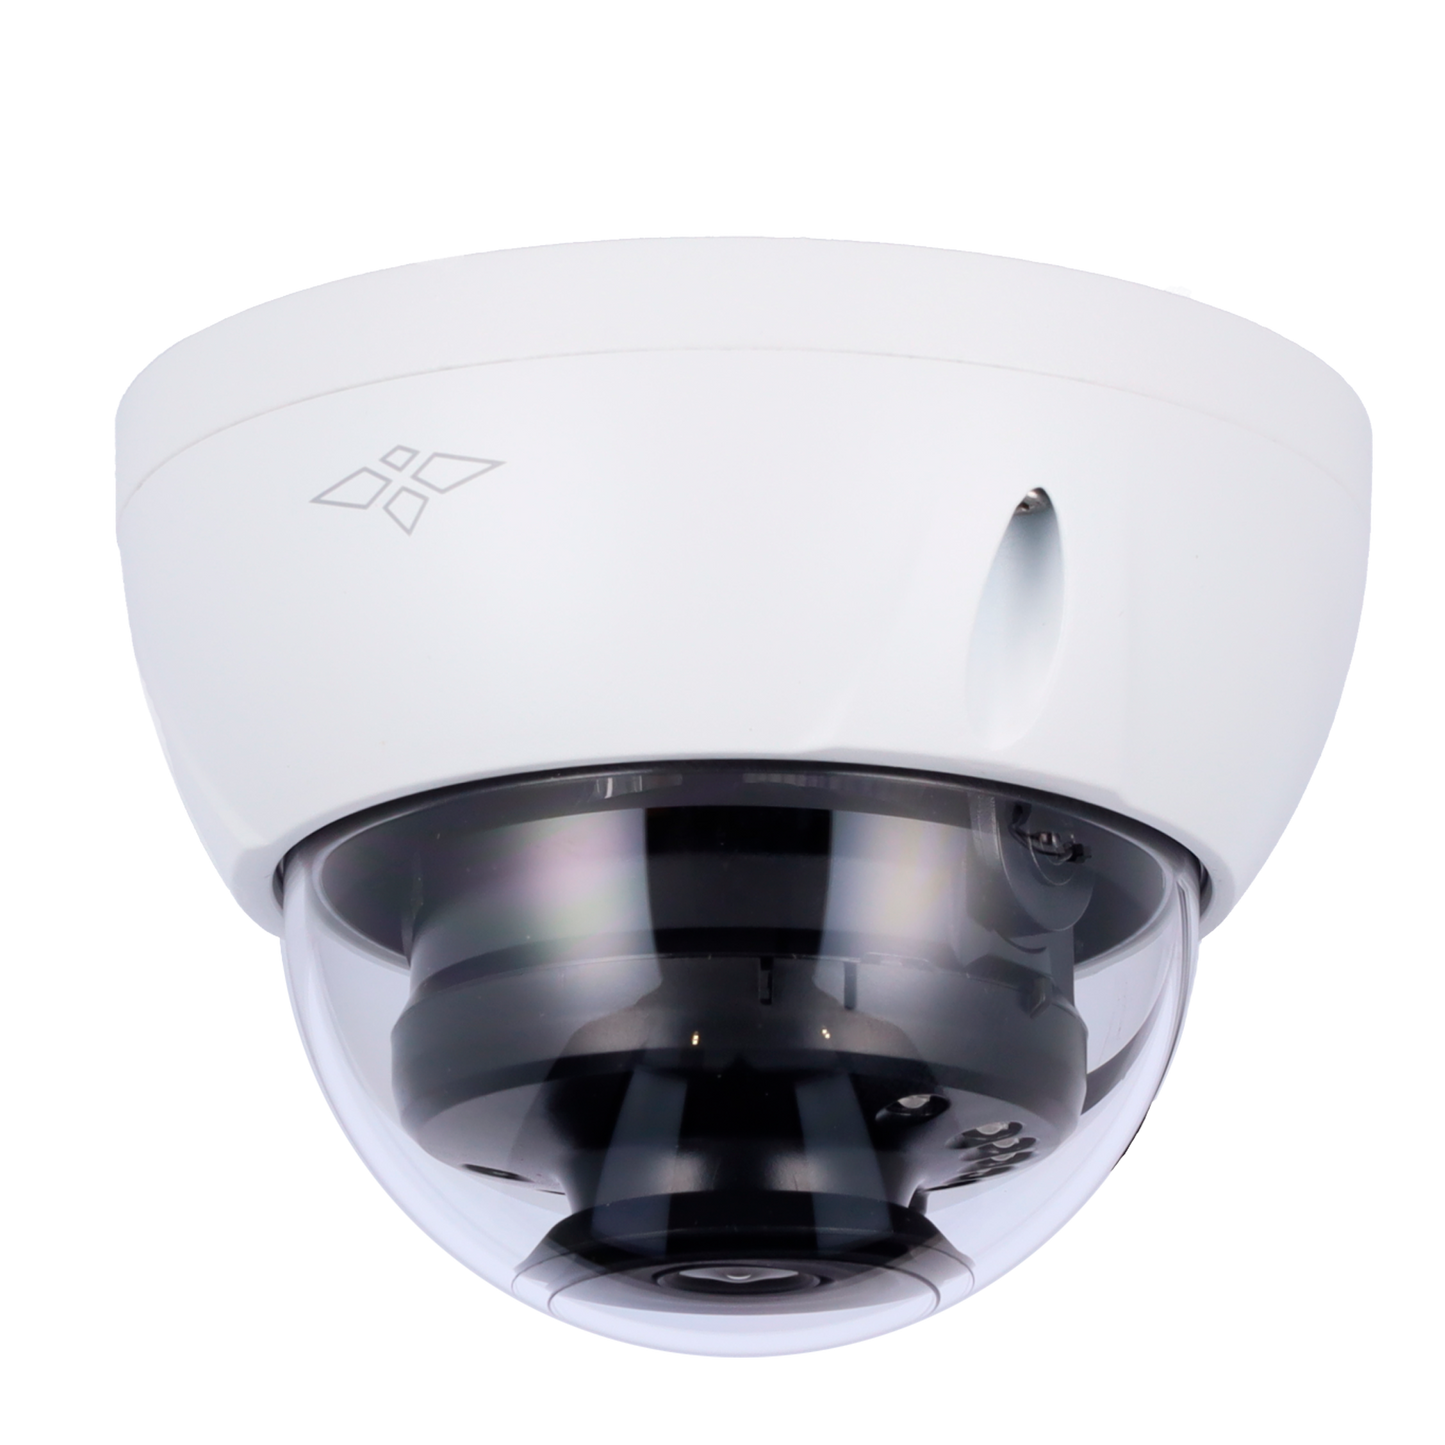 X-Security Telecamera Dome 3K Gamma ECO - Uscita 4 en 1 / Risoluzione 3K (2880x1620) - 1/2.7” Progressive CMOS Starlight 3K (5Mpx 16:9) - Lente 2.8 mm - LED Smart IR portata 30 m - Impermeabile IP67 | Antivandalo IK10